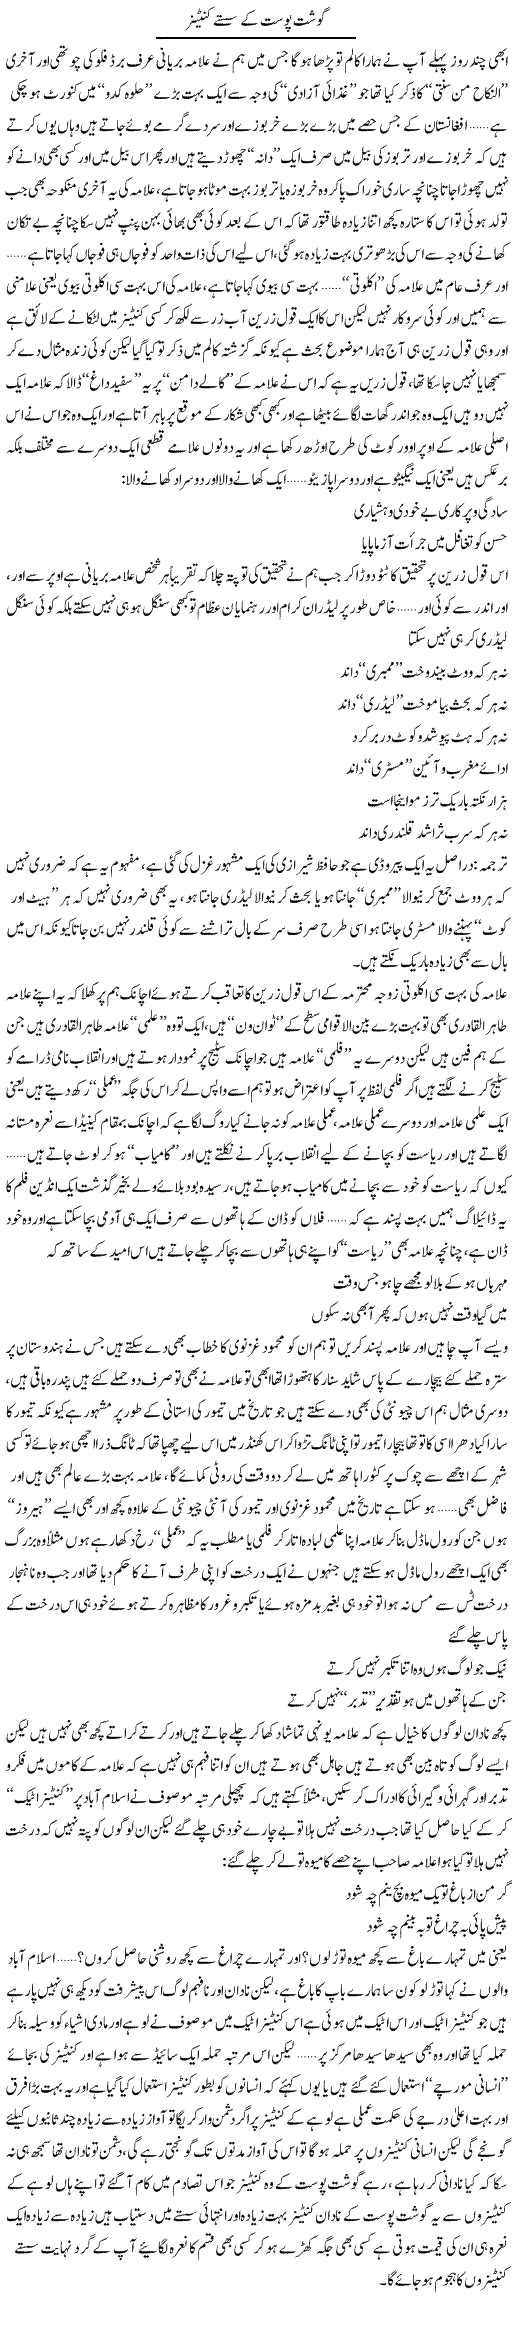 Gost Post K Saste Containers | Saad Ullah Jan Barq | Daily Urdu Columns